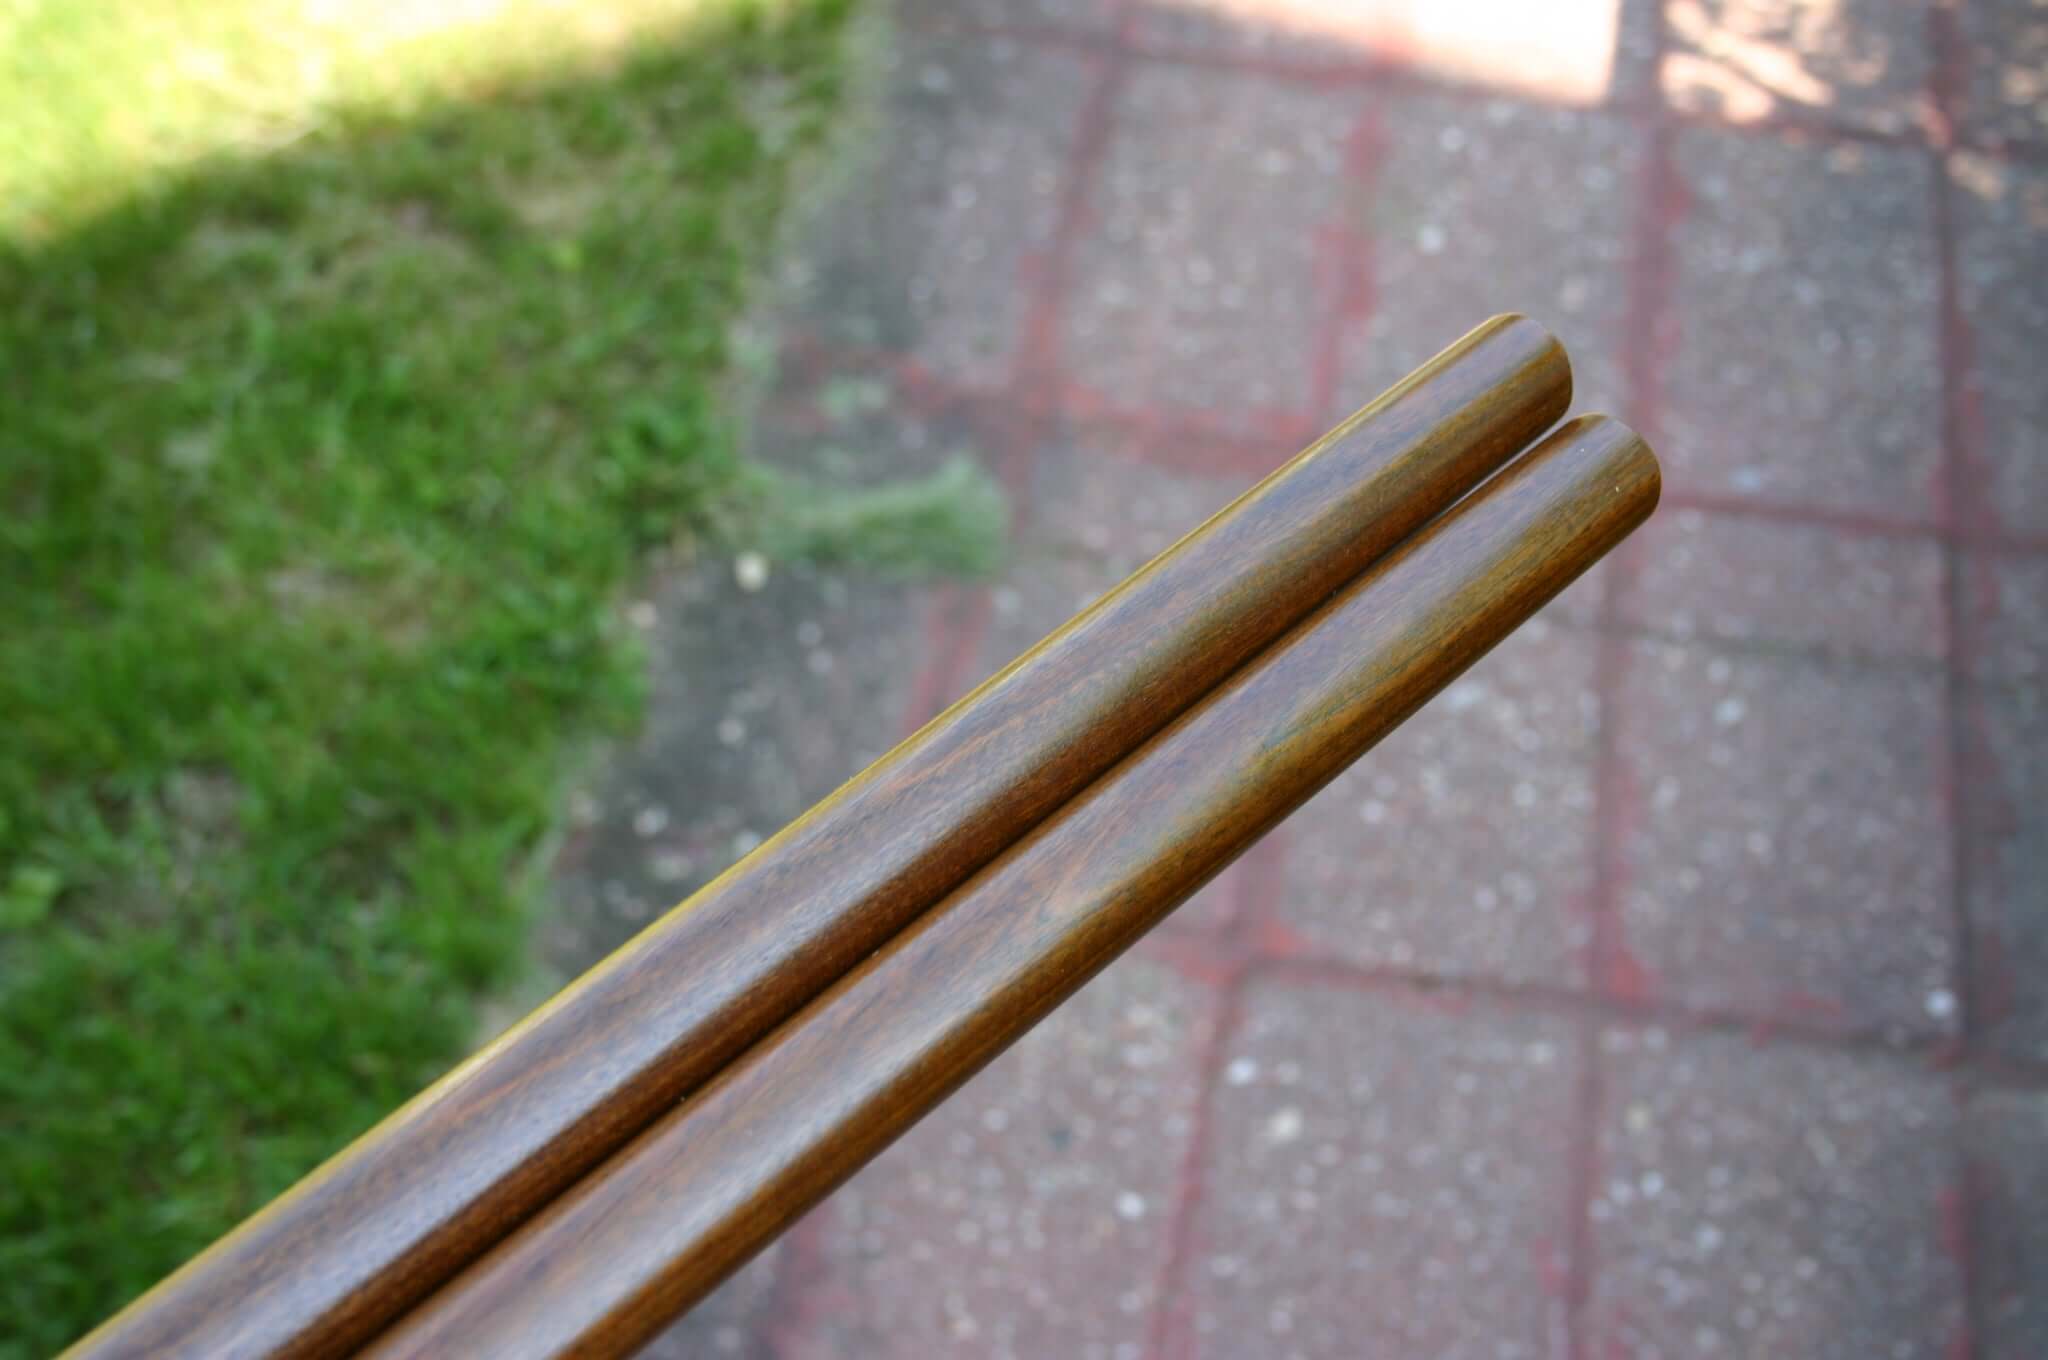 escrima sticks for martial arts made from ipe wood